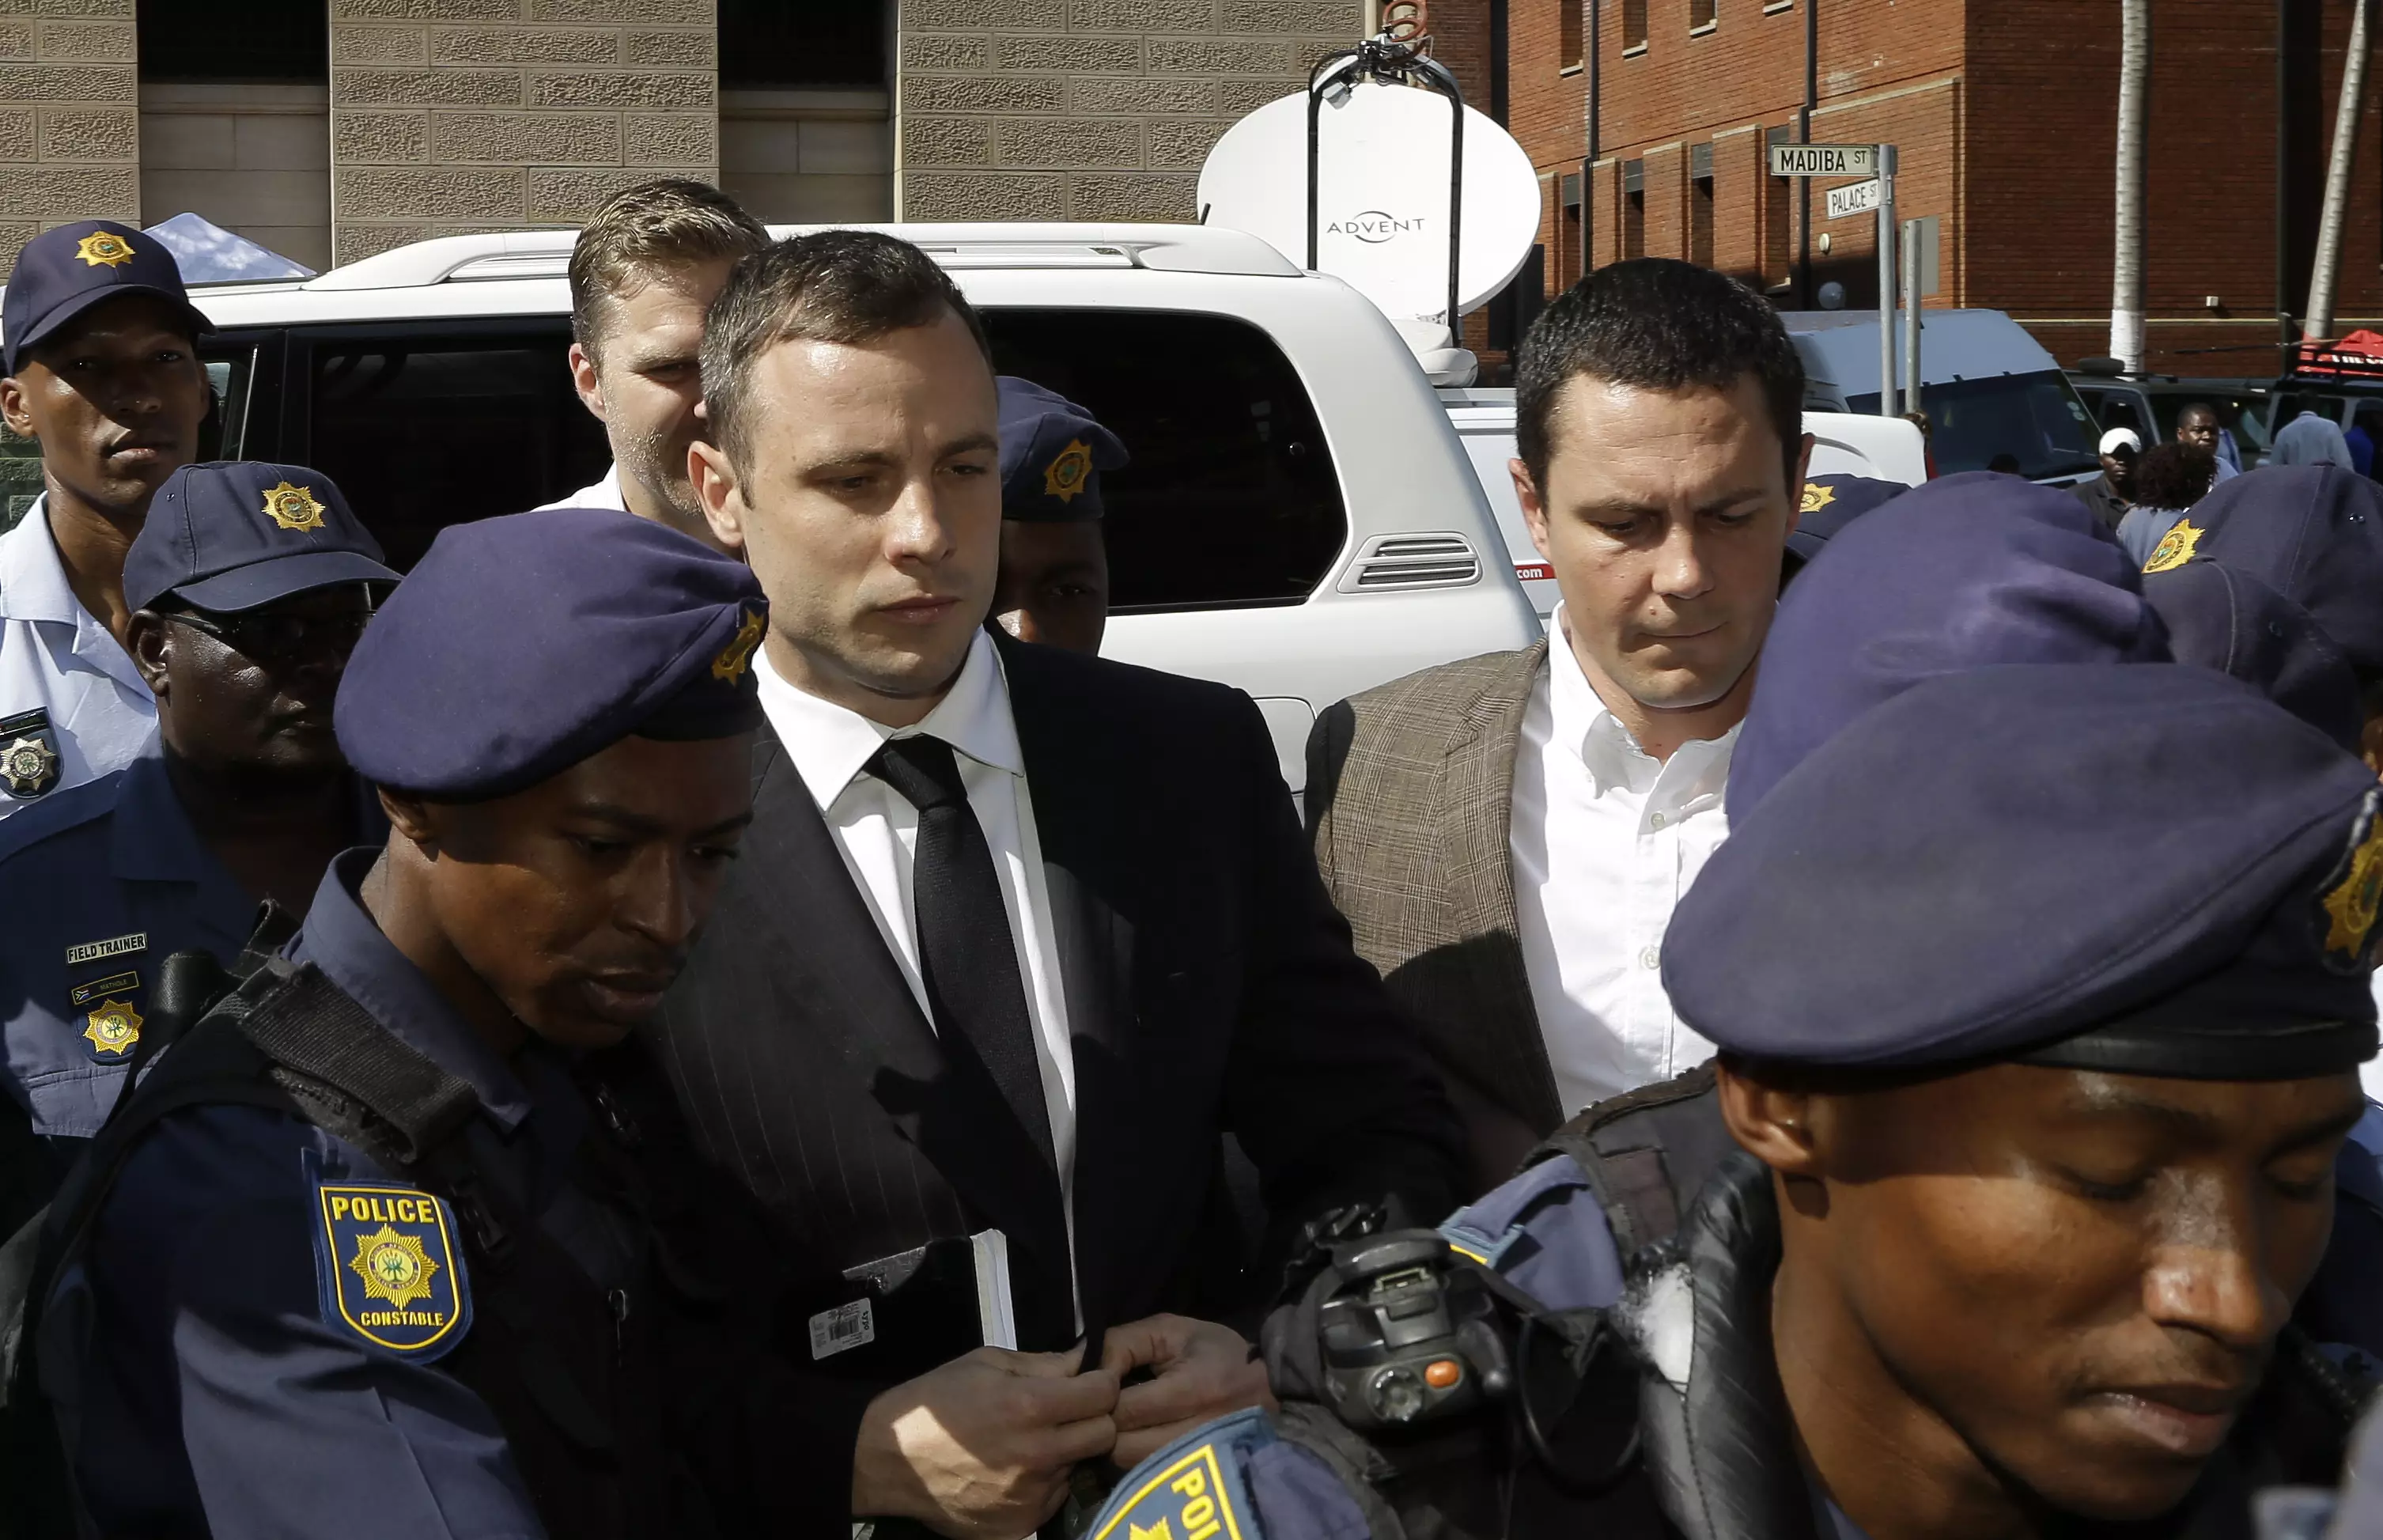 Inside The Prison Where Oscar Pistorius Will Serve His Sentence